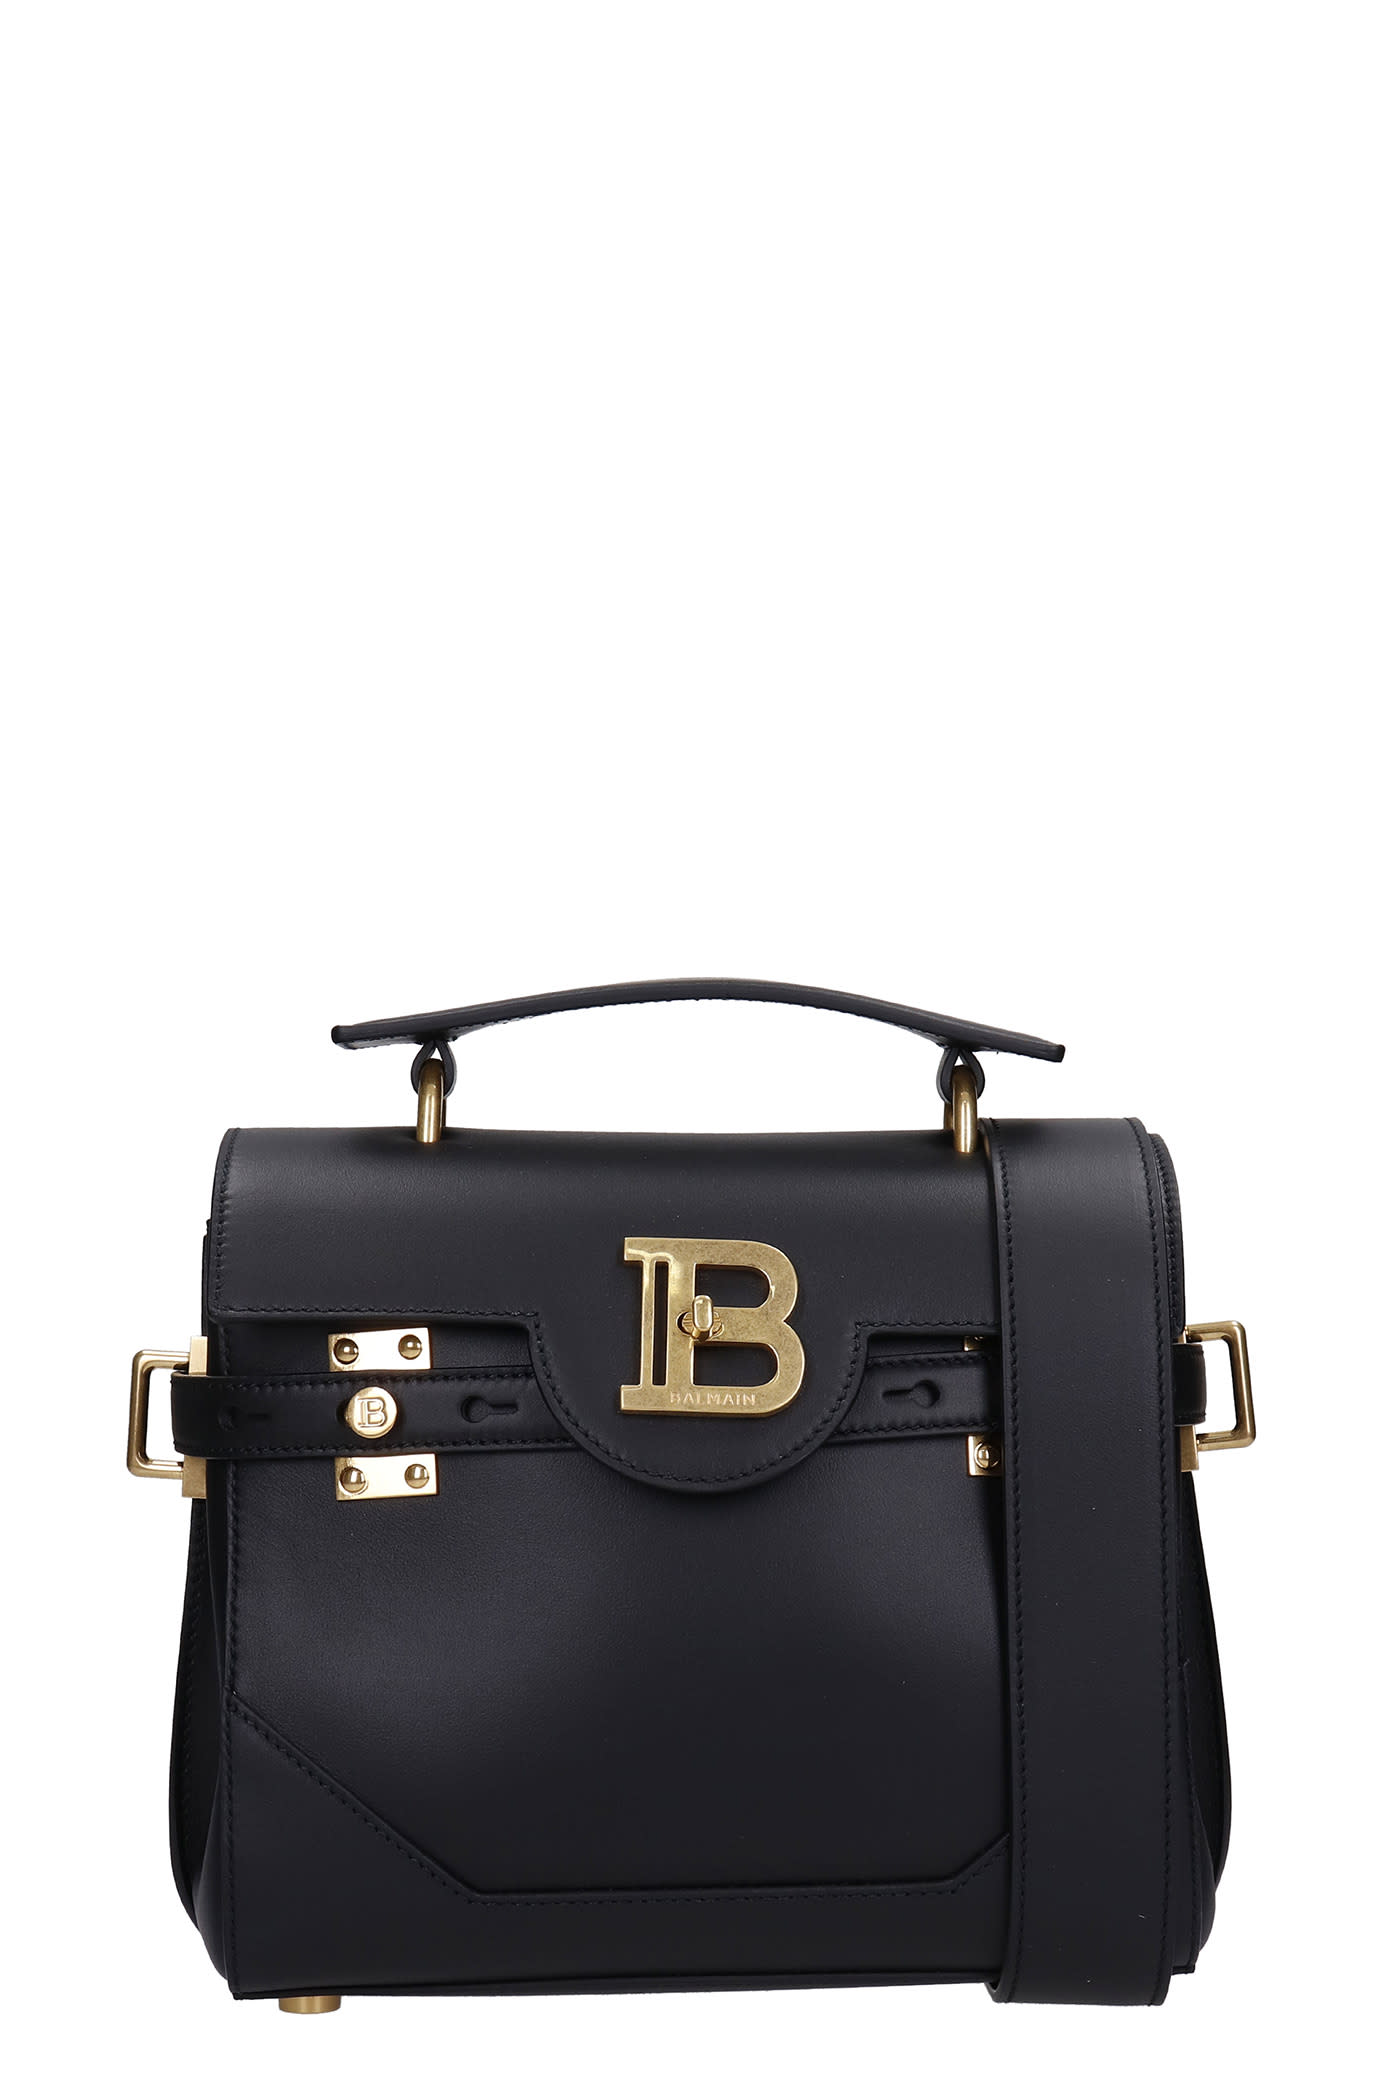 Balmain B-buzz 23 Hand Bag In Black Leather